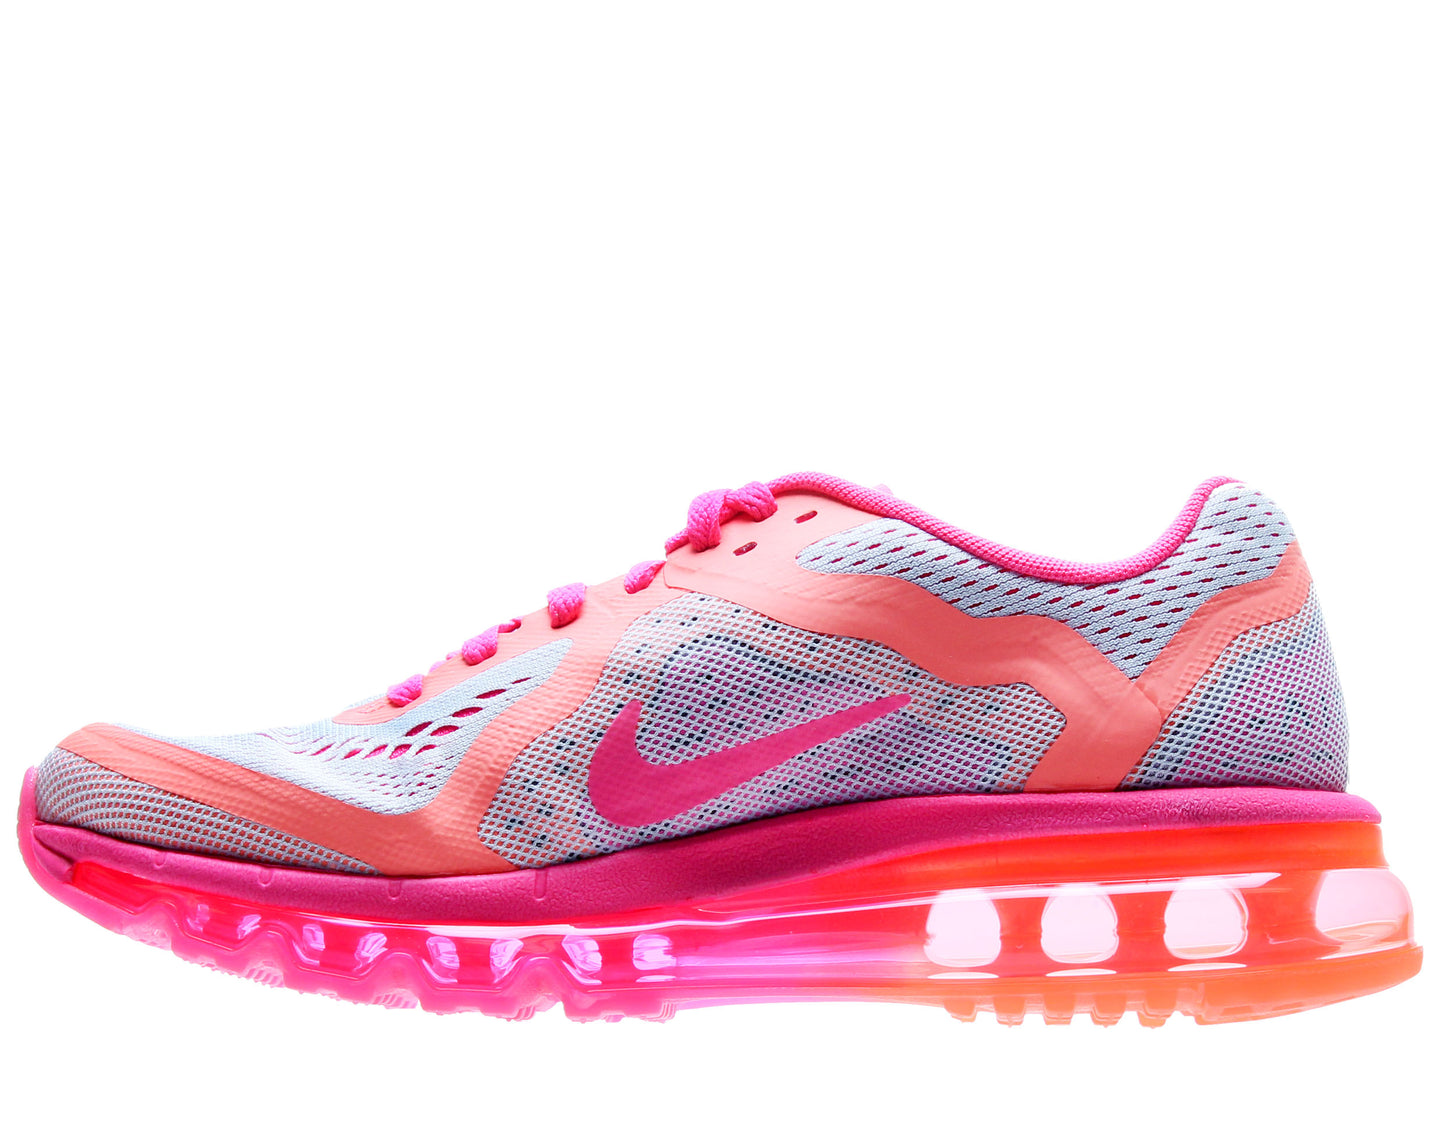 Nike Air Max 2014 (GS) Pure Platinum/Bright Mango Girls Running Shoes 631331-003